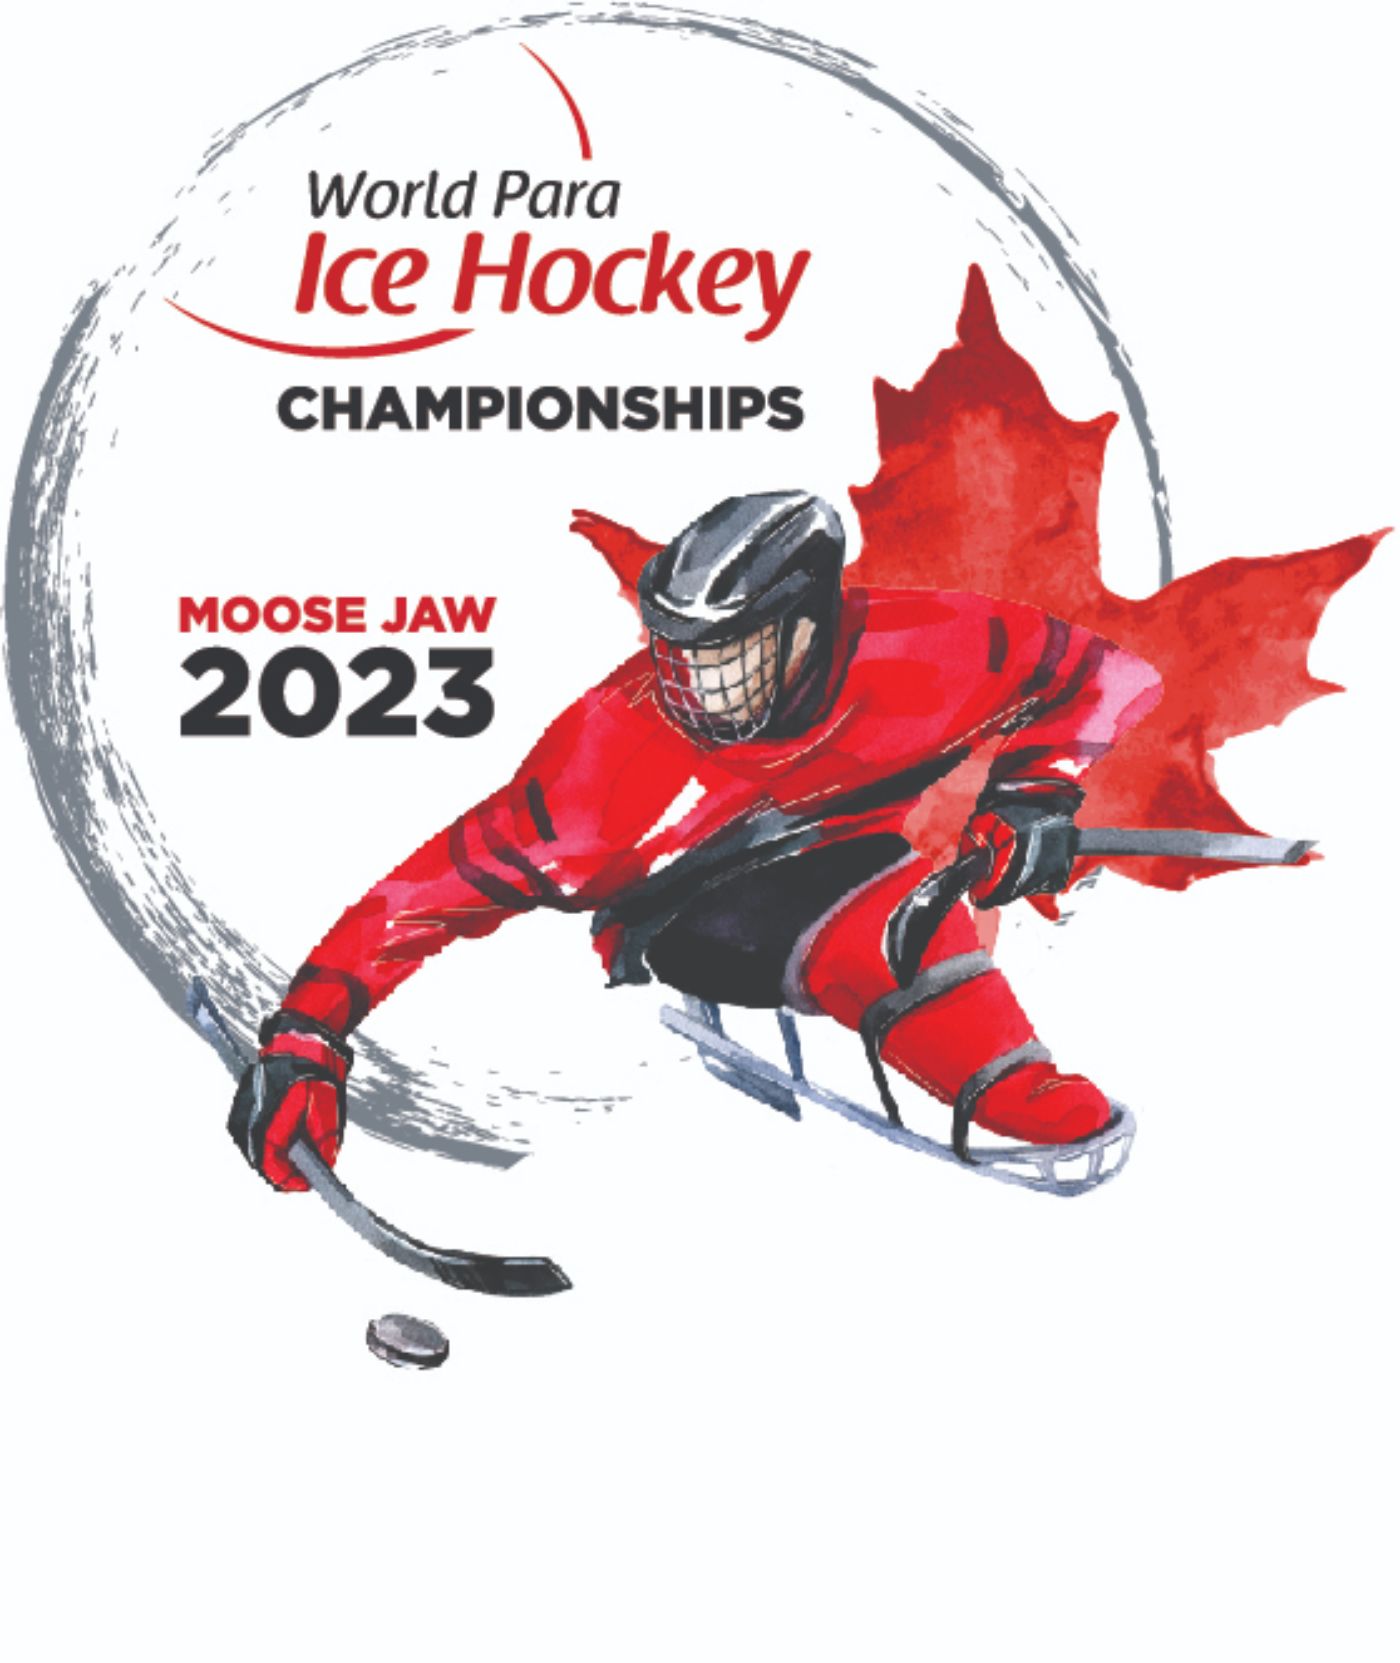 The logo of the Moose Jaw 2023 Para Ice Hockey World Championships